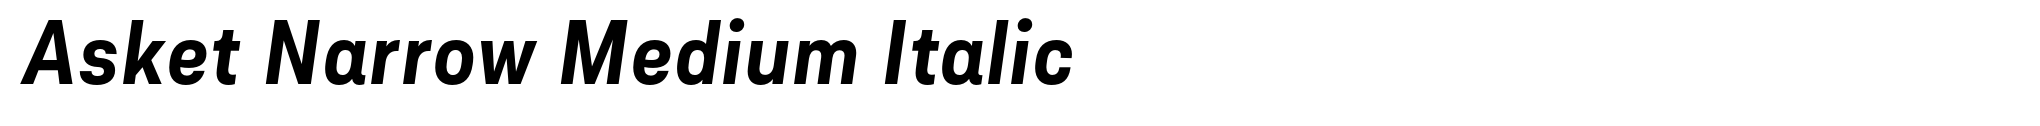 Asket Narrow Medium Italic image